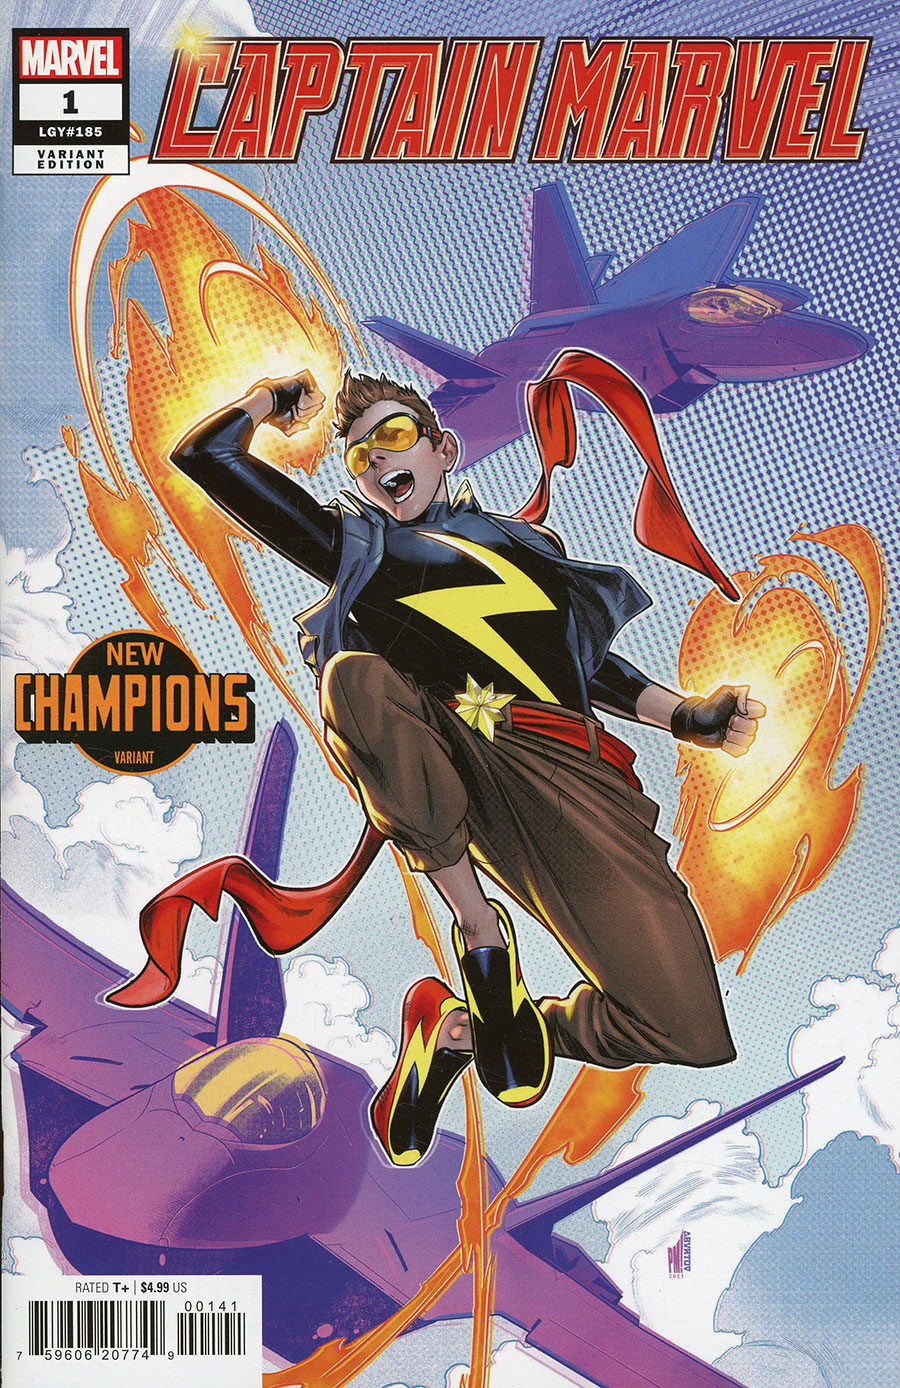 Captain Marvel Vol 10 #1 Cover B Variant Paco Medina New Champions Cover